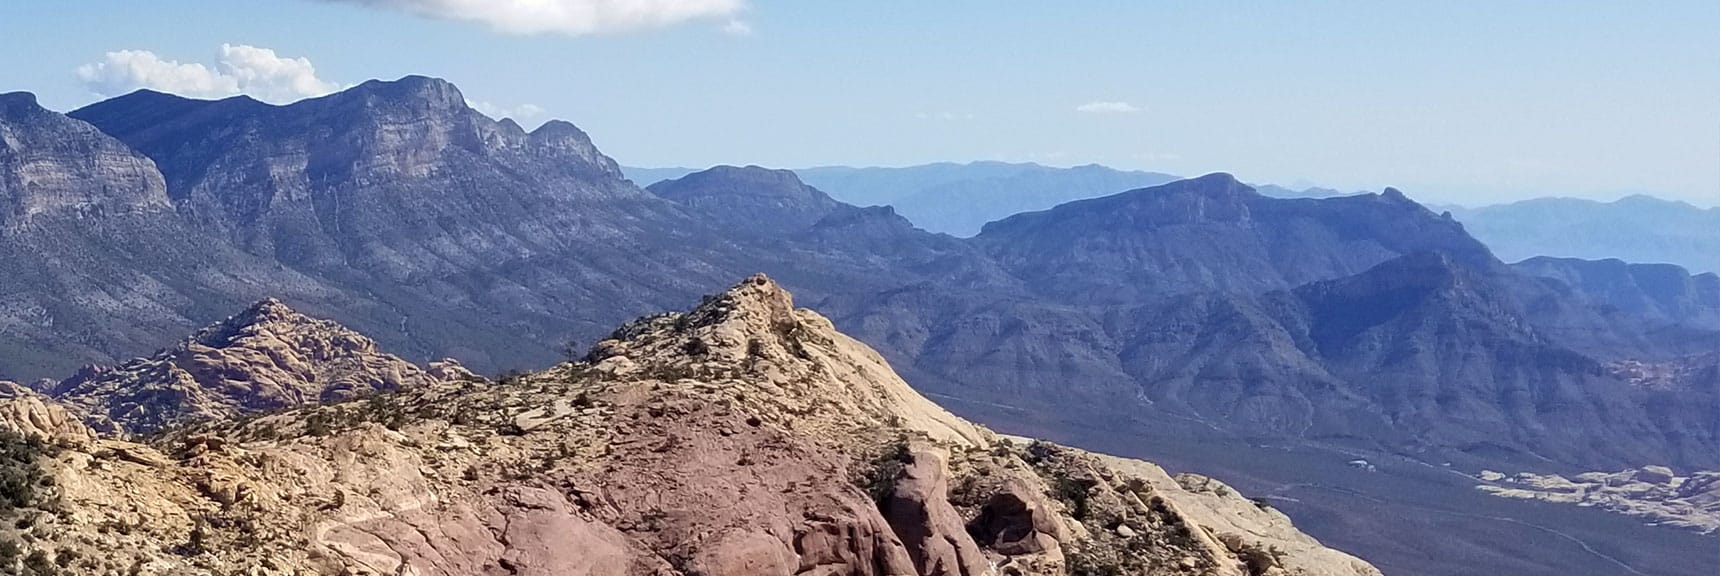 Turtlehead Peak, Damsel Peak and La Madre Mountain Viewed from Piedmont Ridge Approach to Goat Rock/North Peak